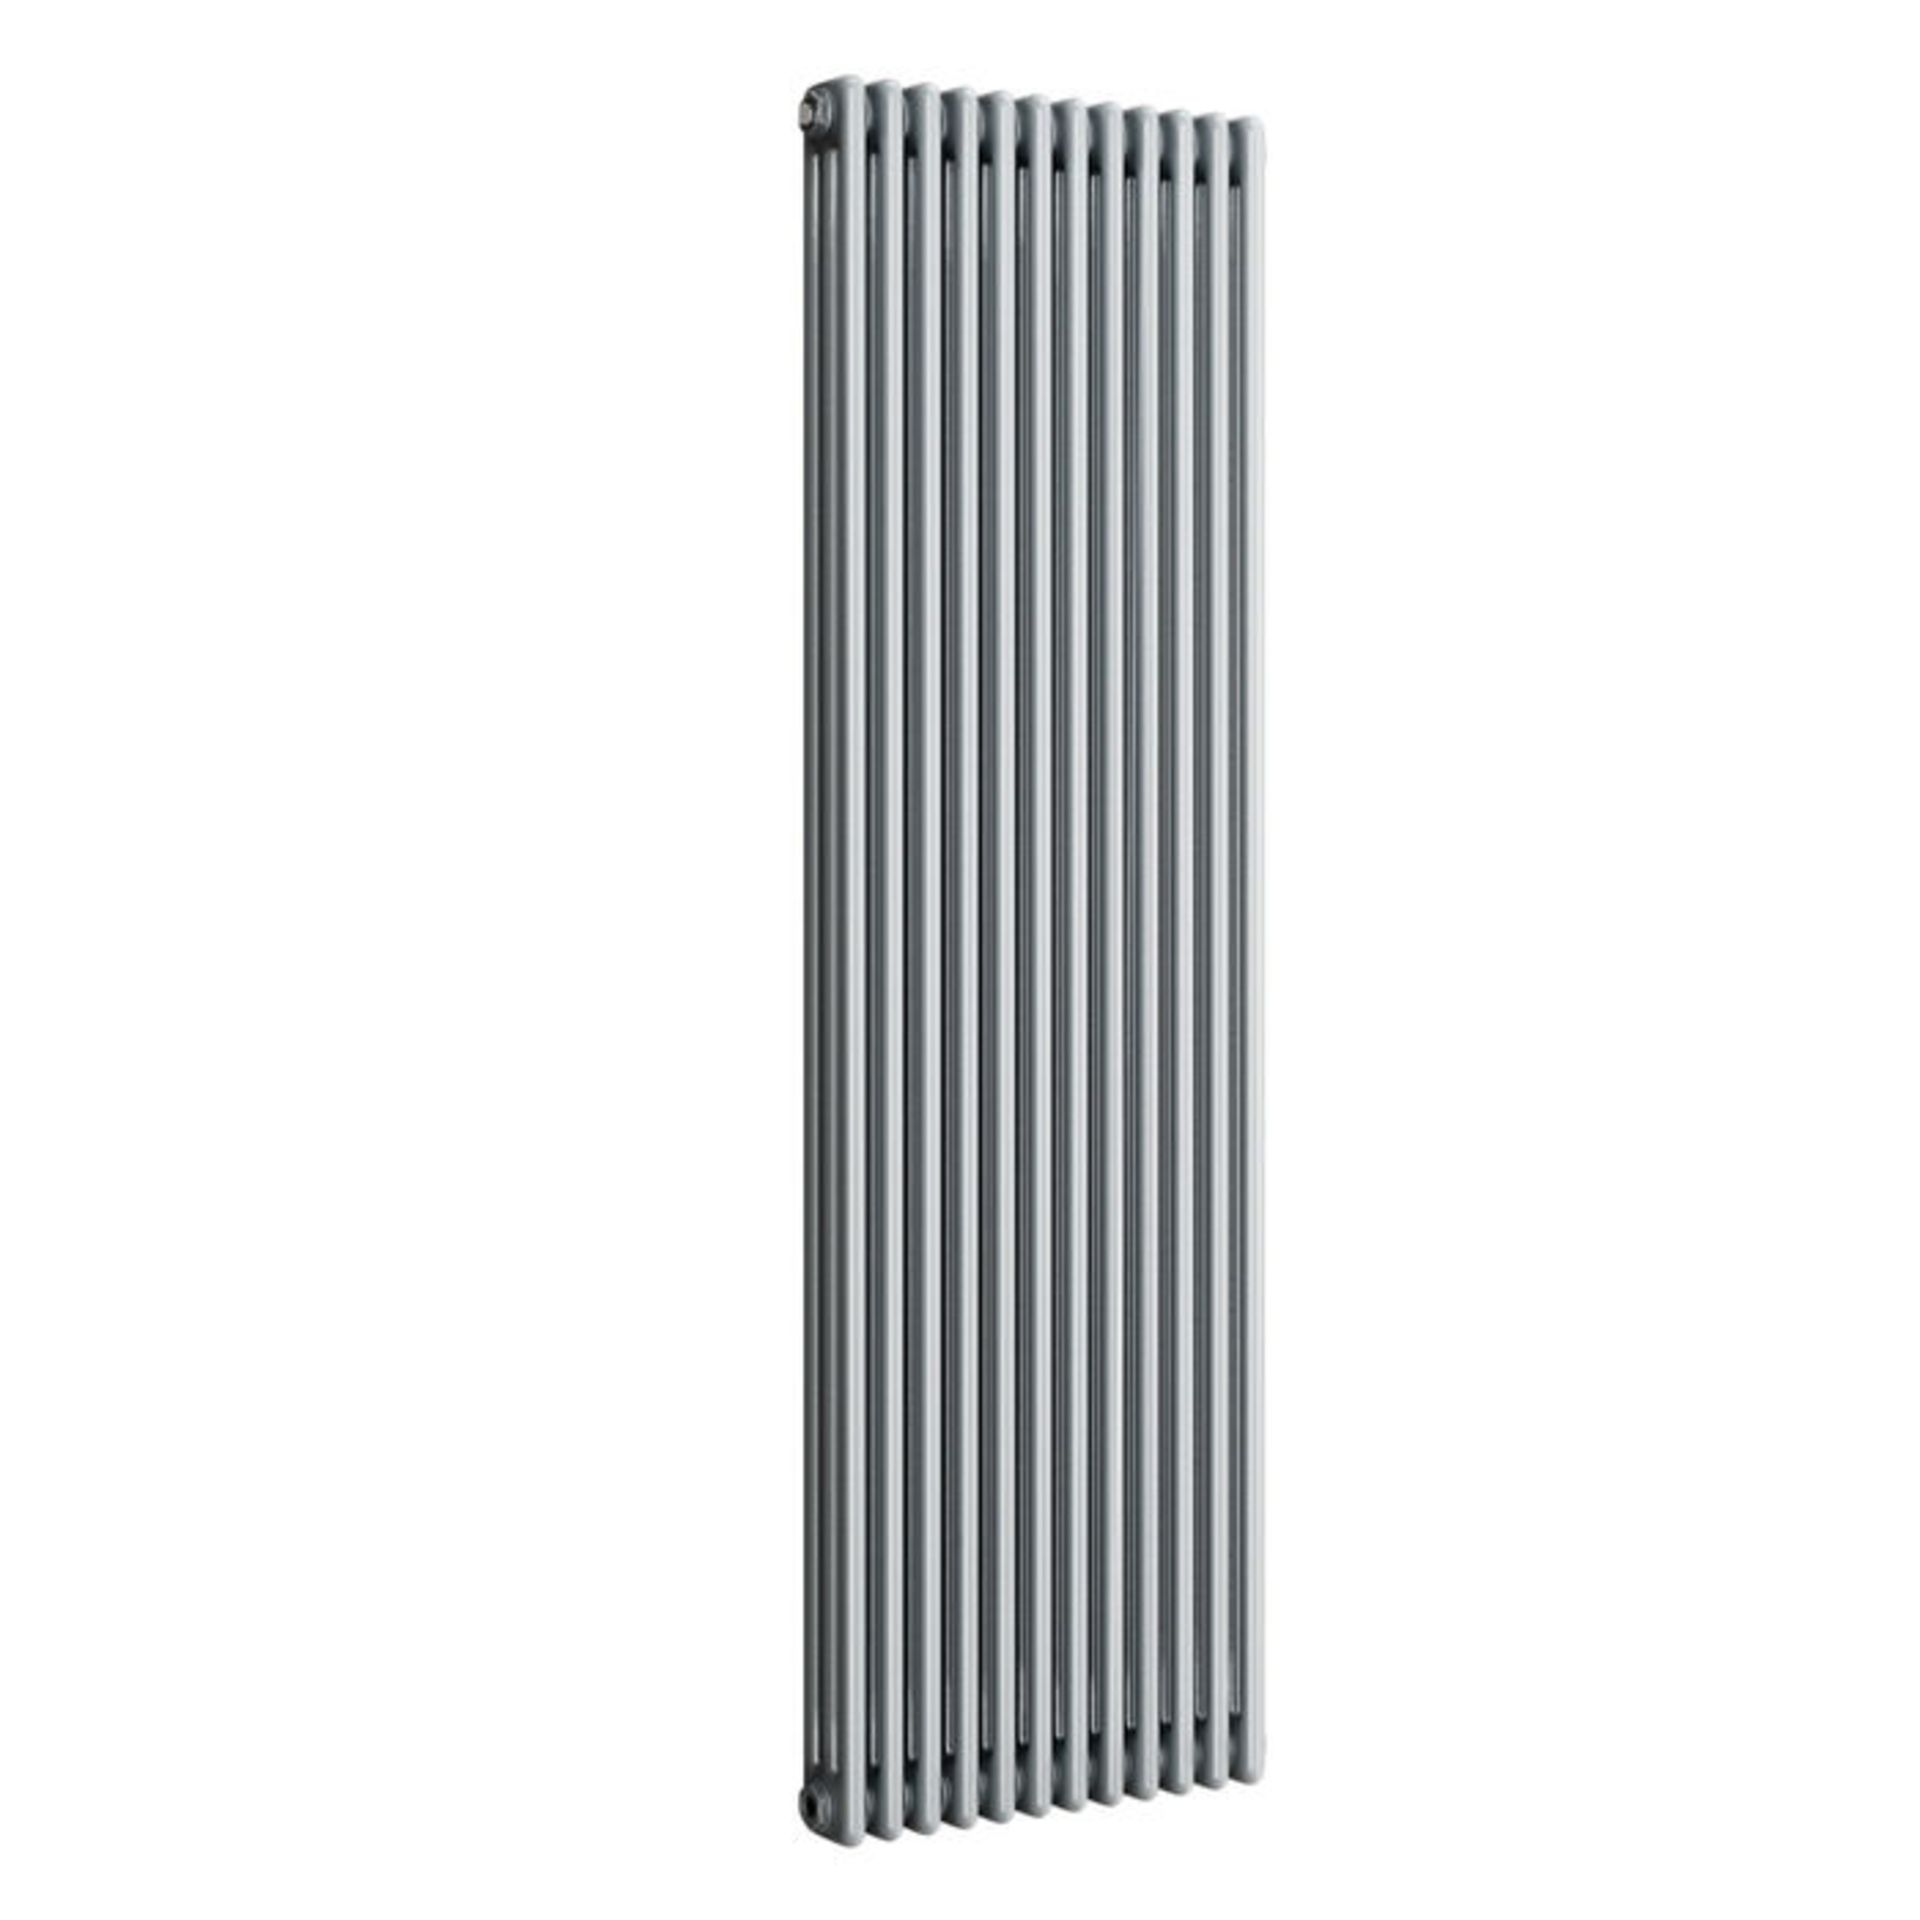 (EY224) 1800x554mm Earl Grey Triple Panel Vertical ColosseumTraditional Radiator. RRP £489.99. - Image 3 of 3